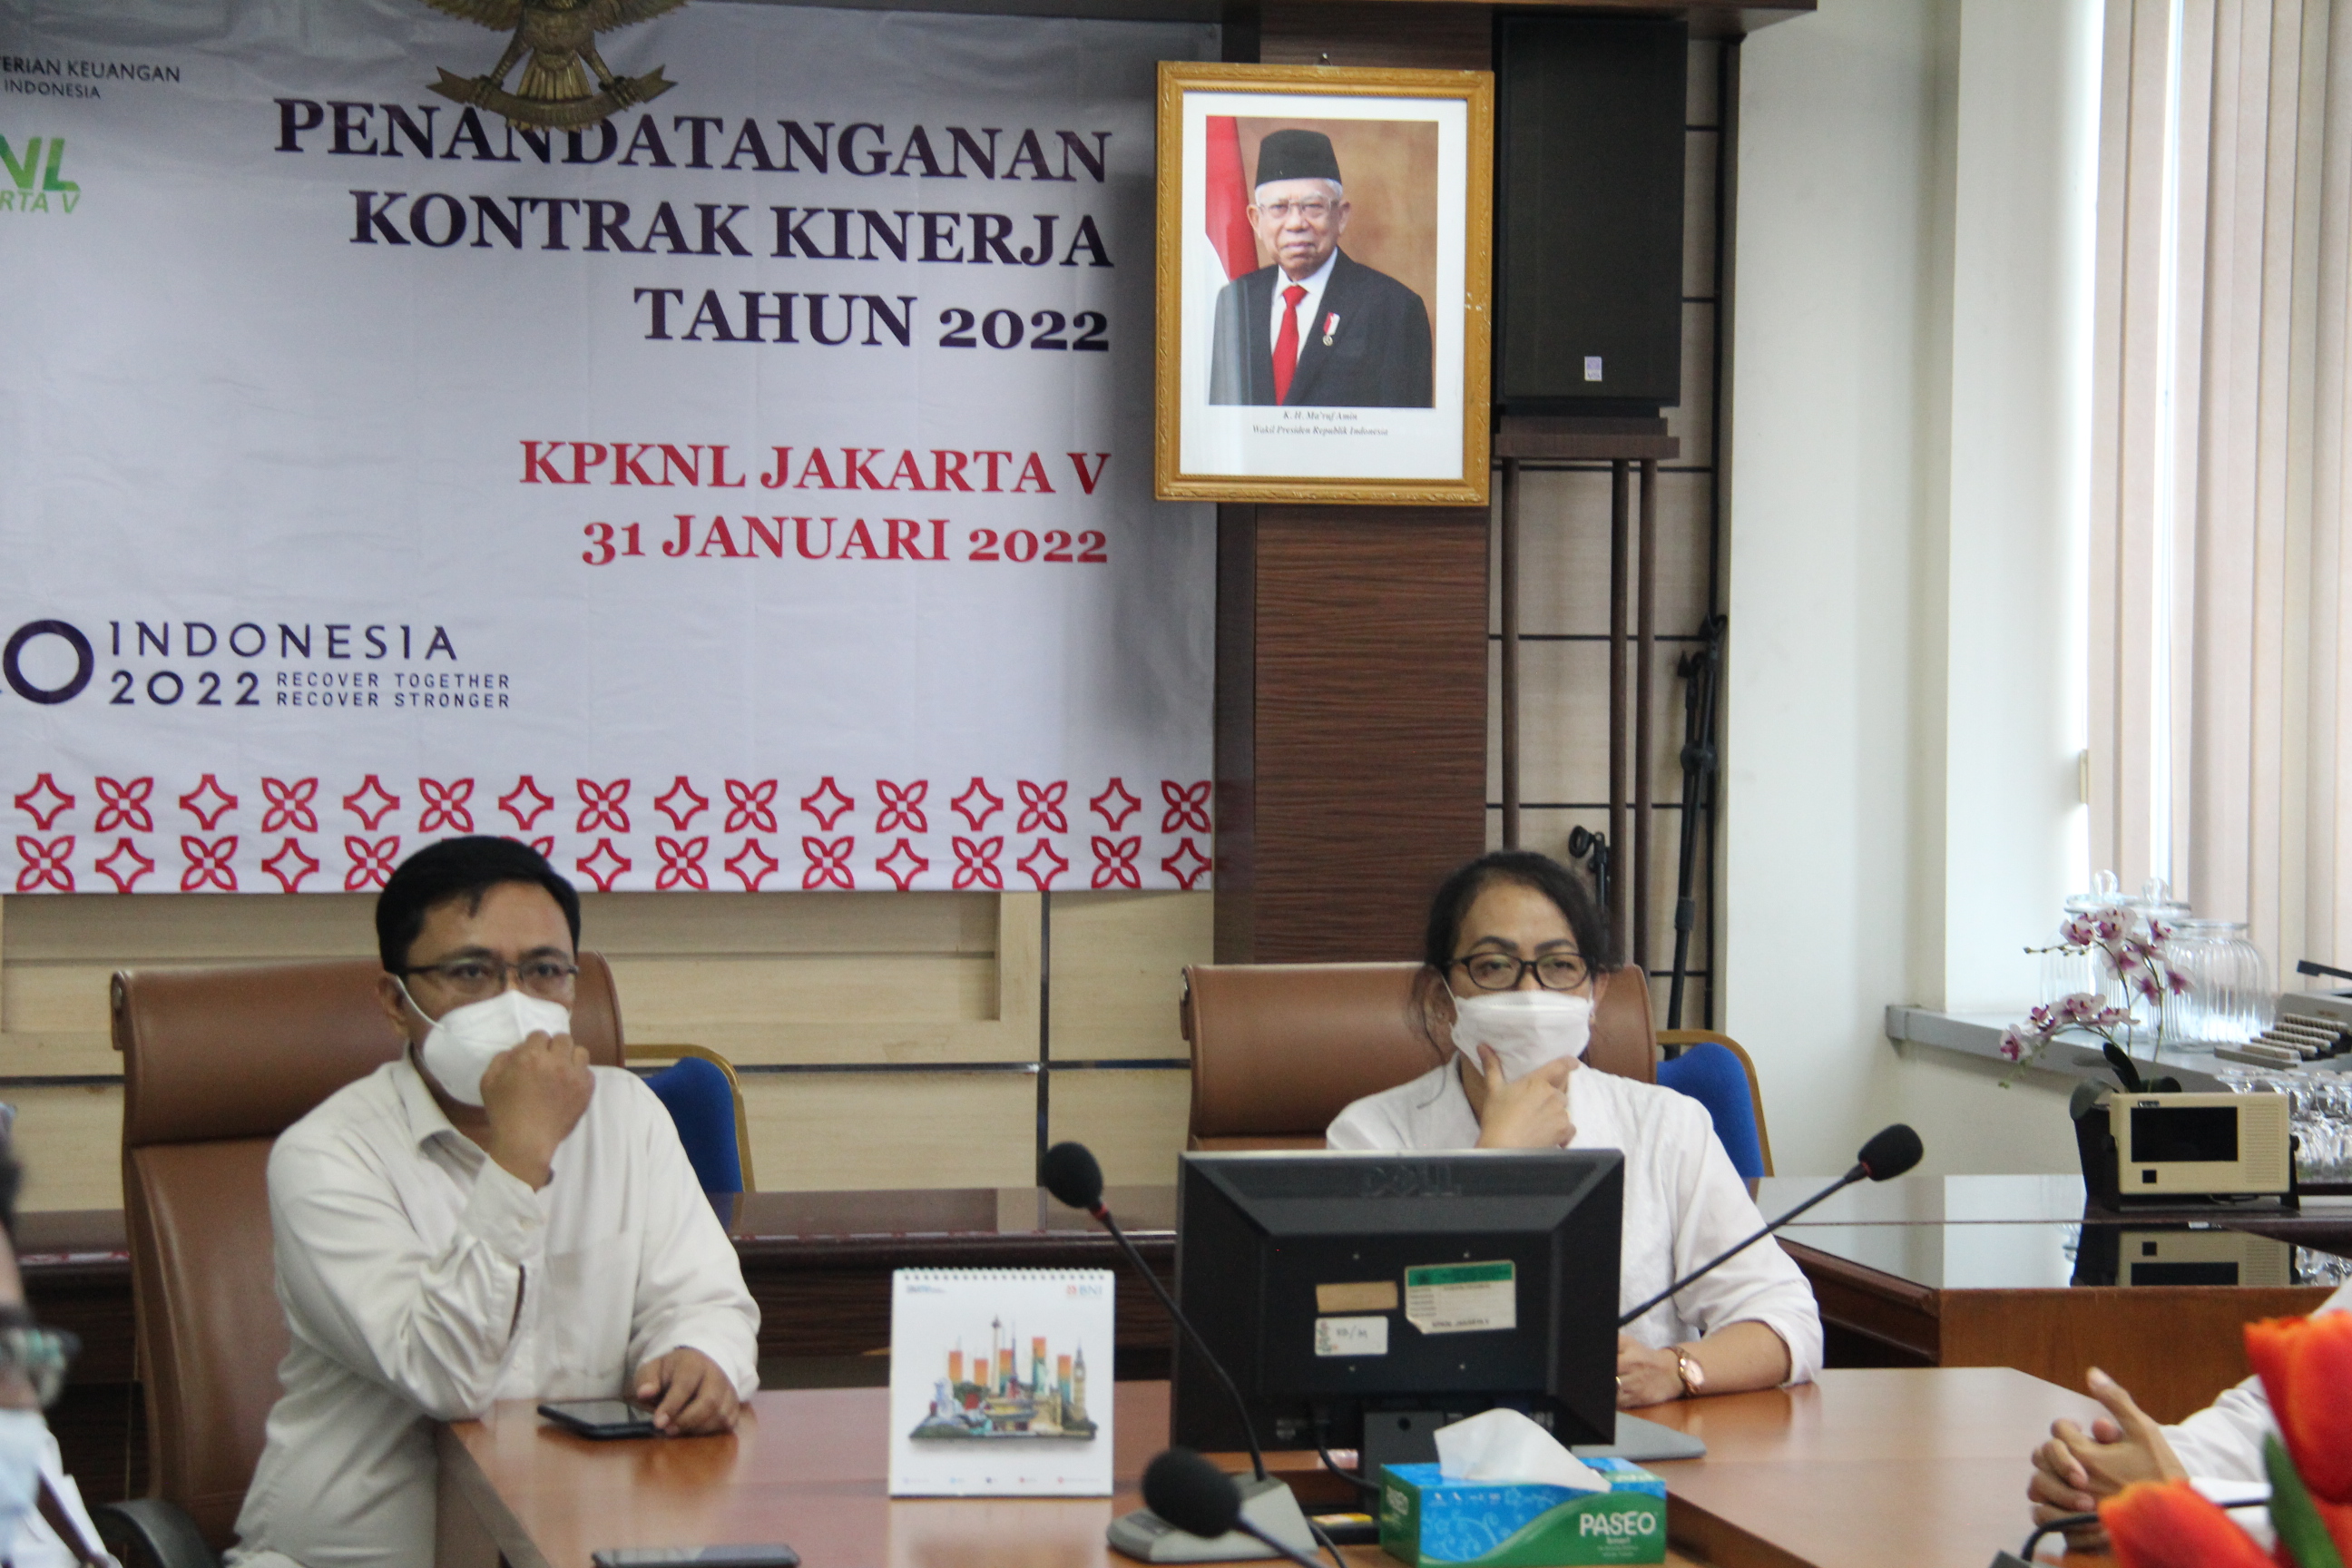 Penandatanganan Kontrak Kinerja Tahun 2022 KPKNL Jakarta V